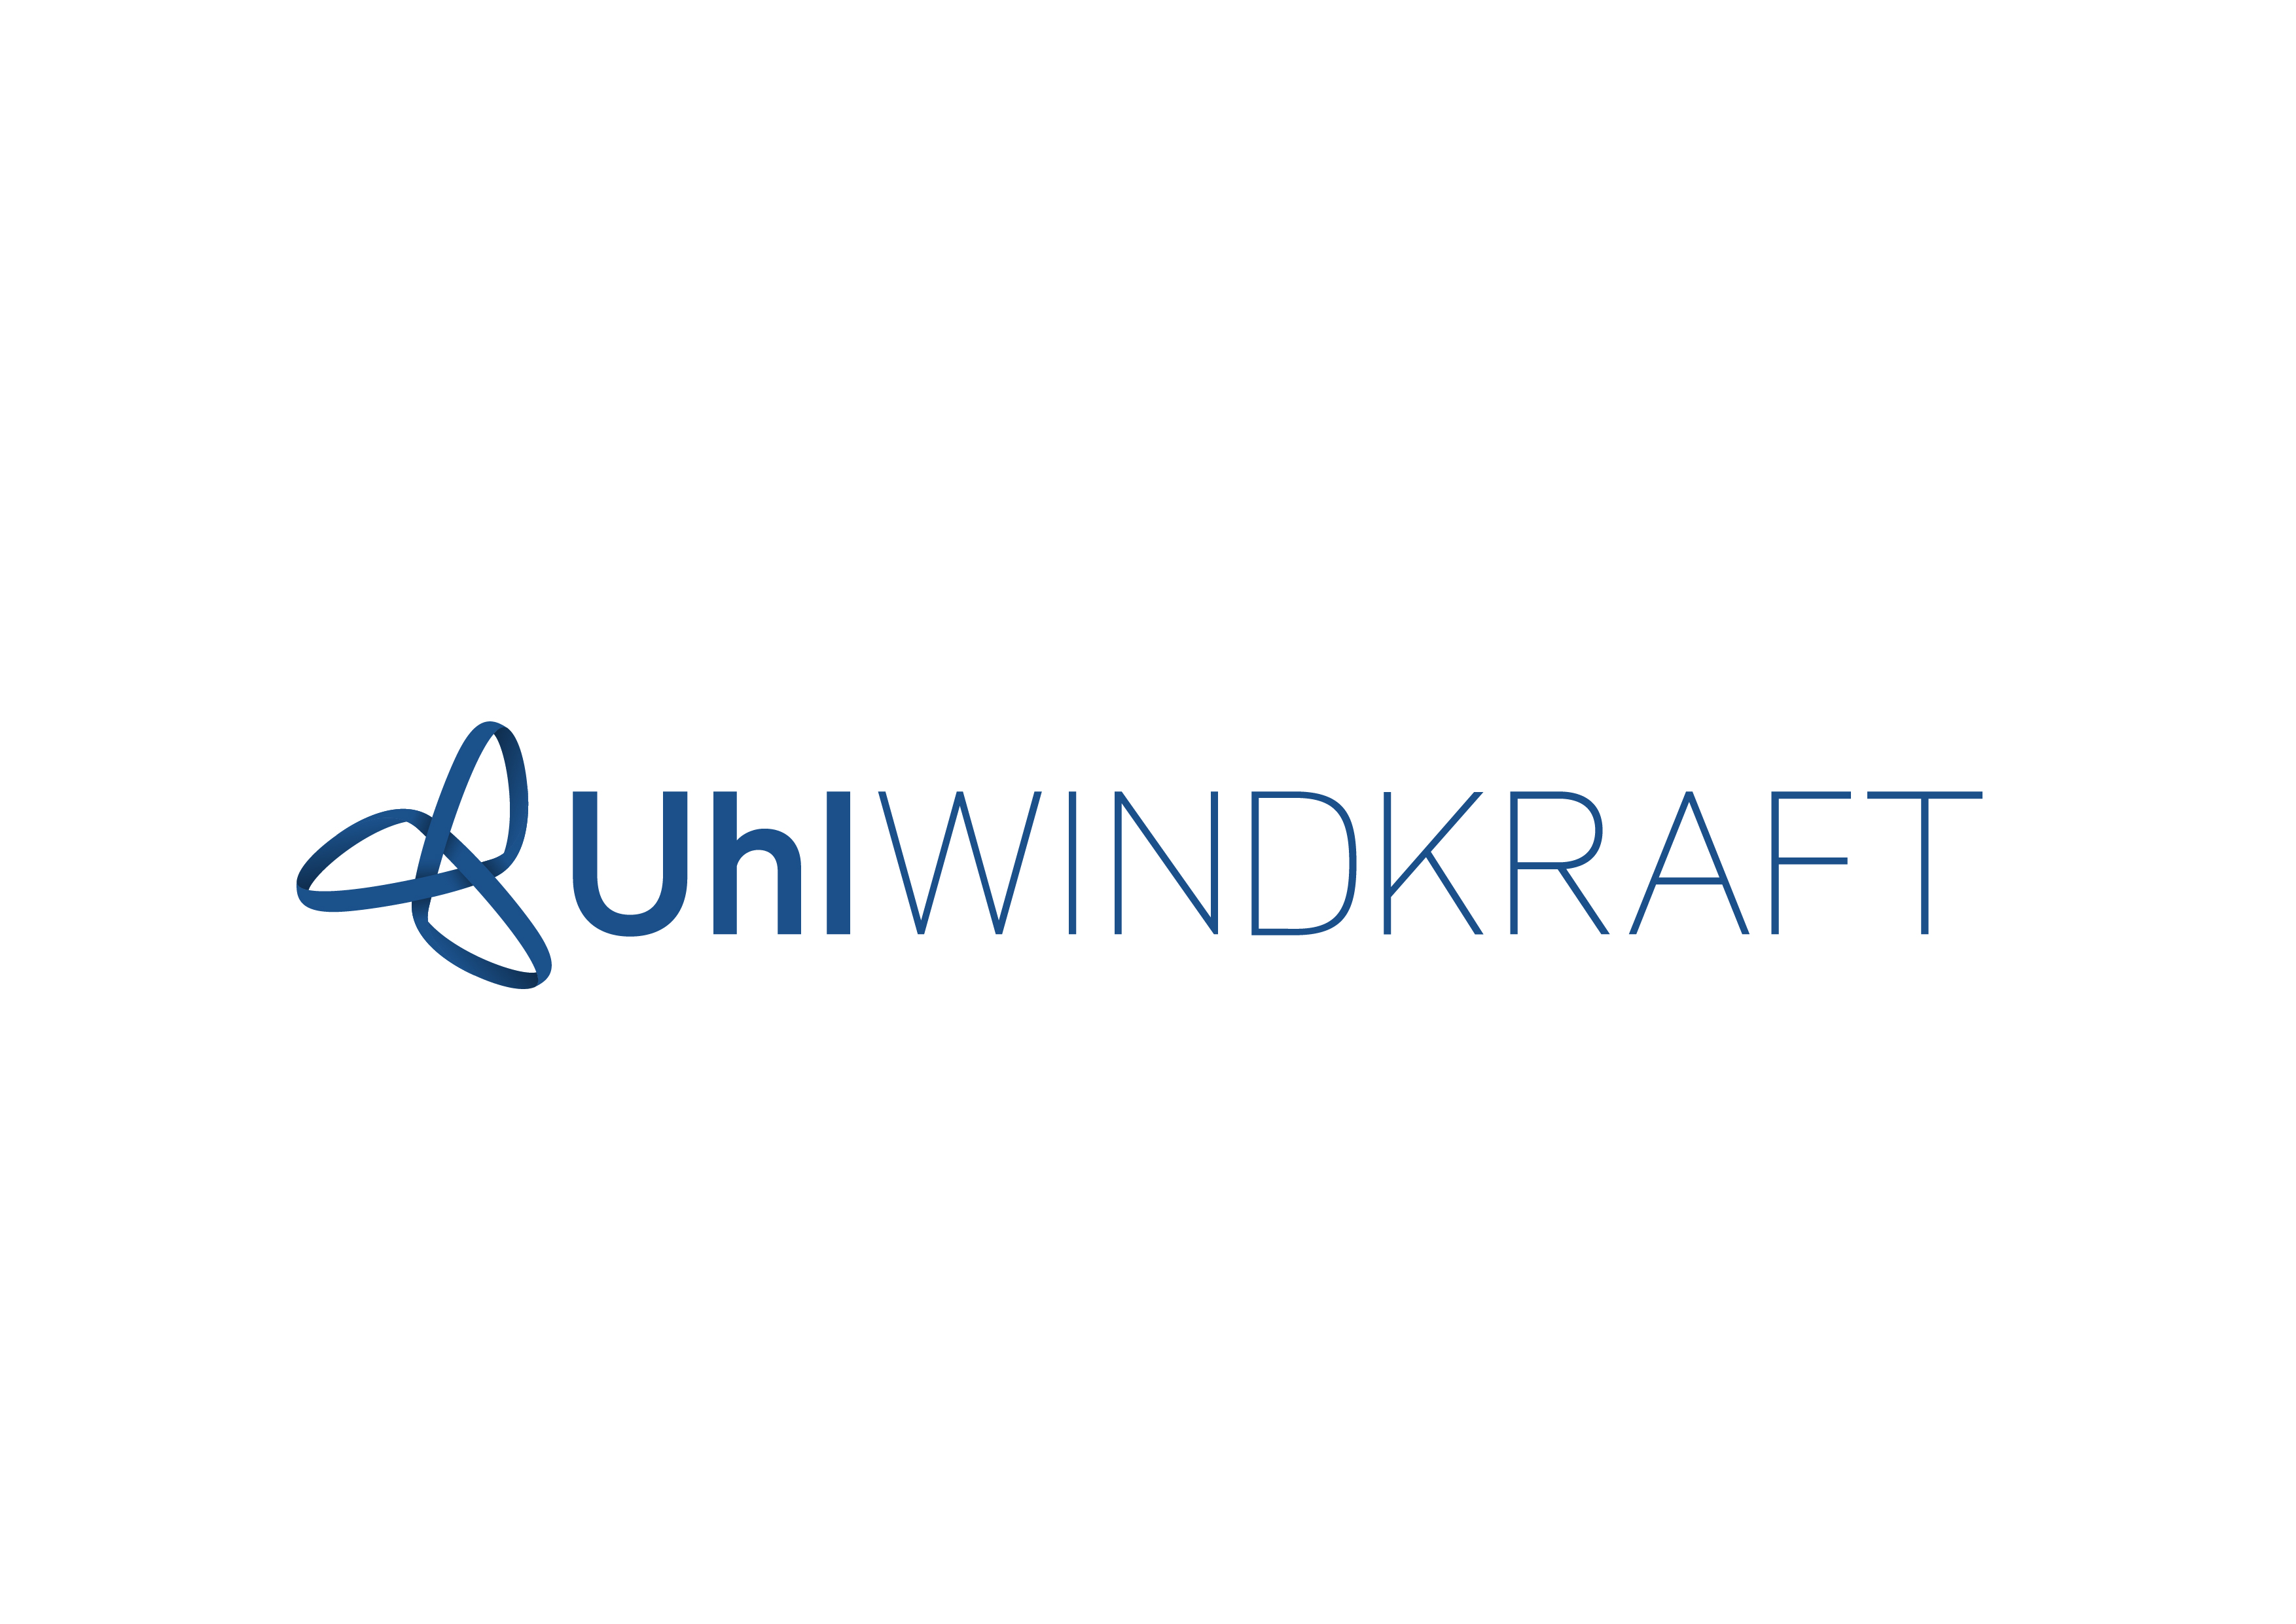 Uhl Windkraft Projektierung GmbH & Co. KG